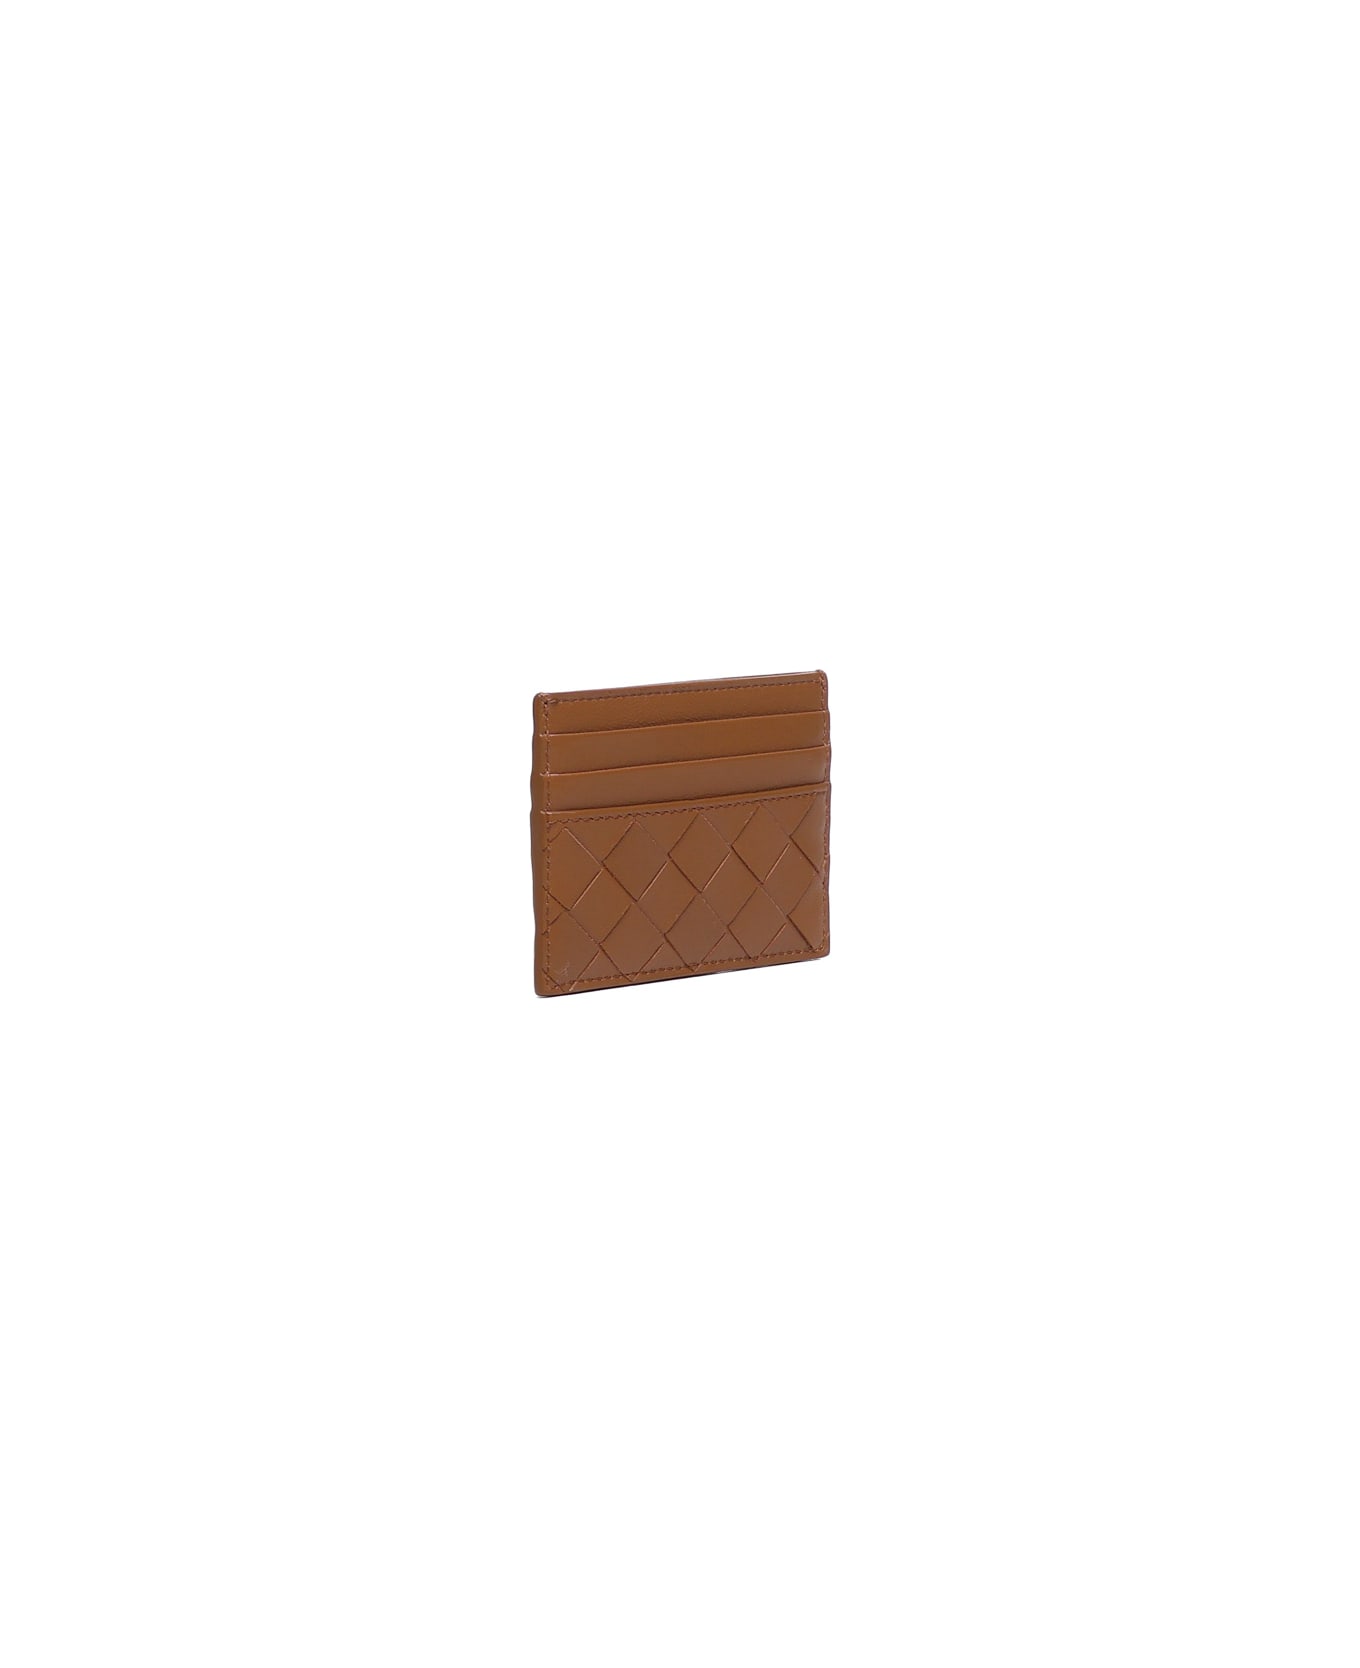 Bottega Veneta Intrecciato Card Case - Saddle Brown